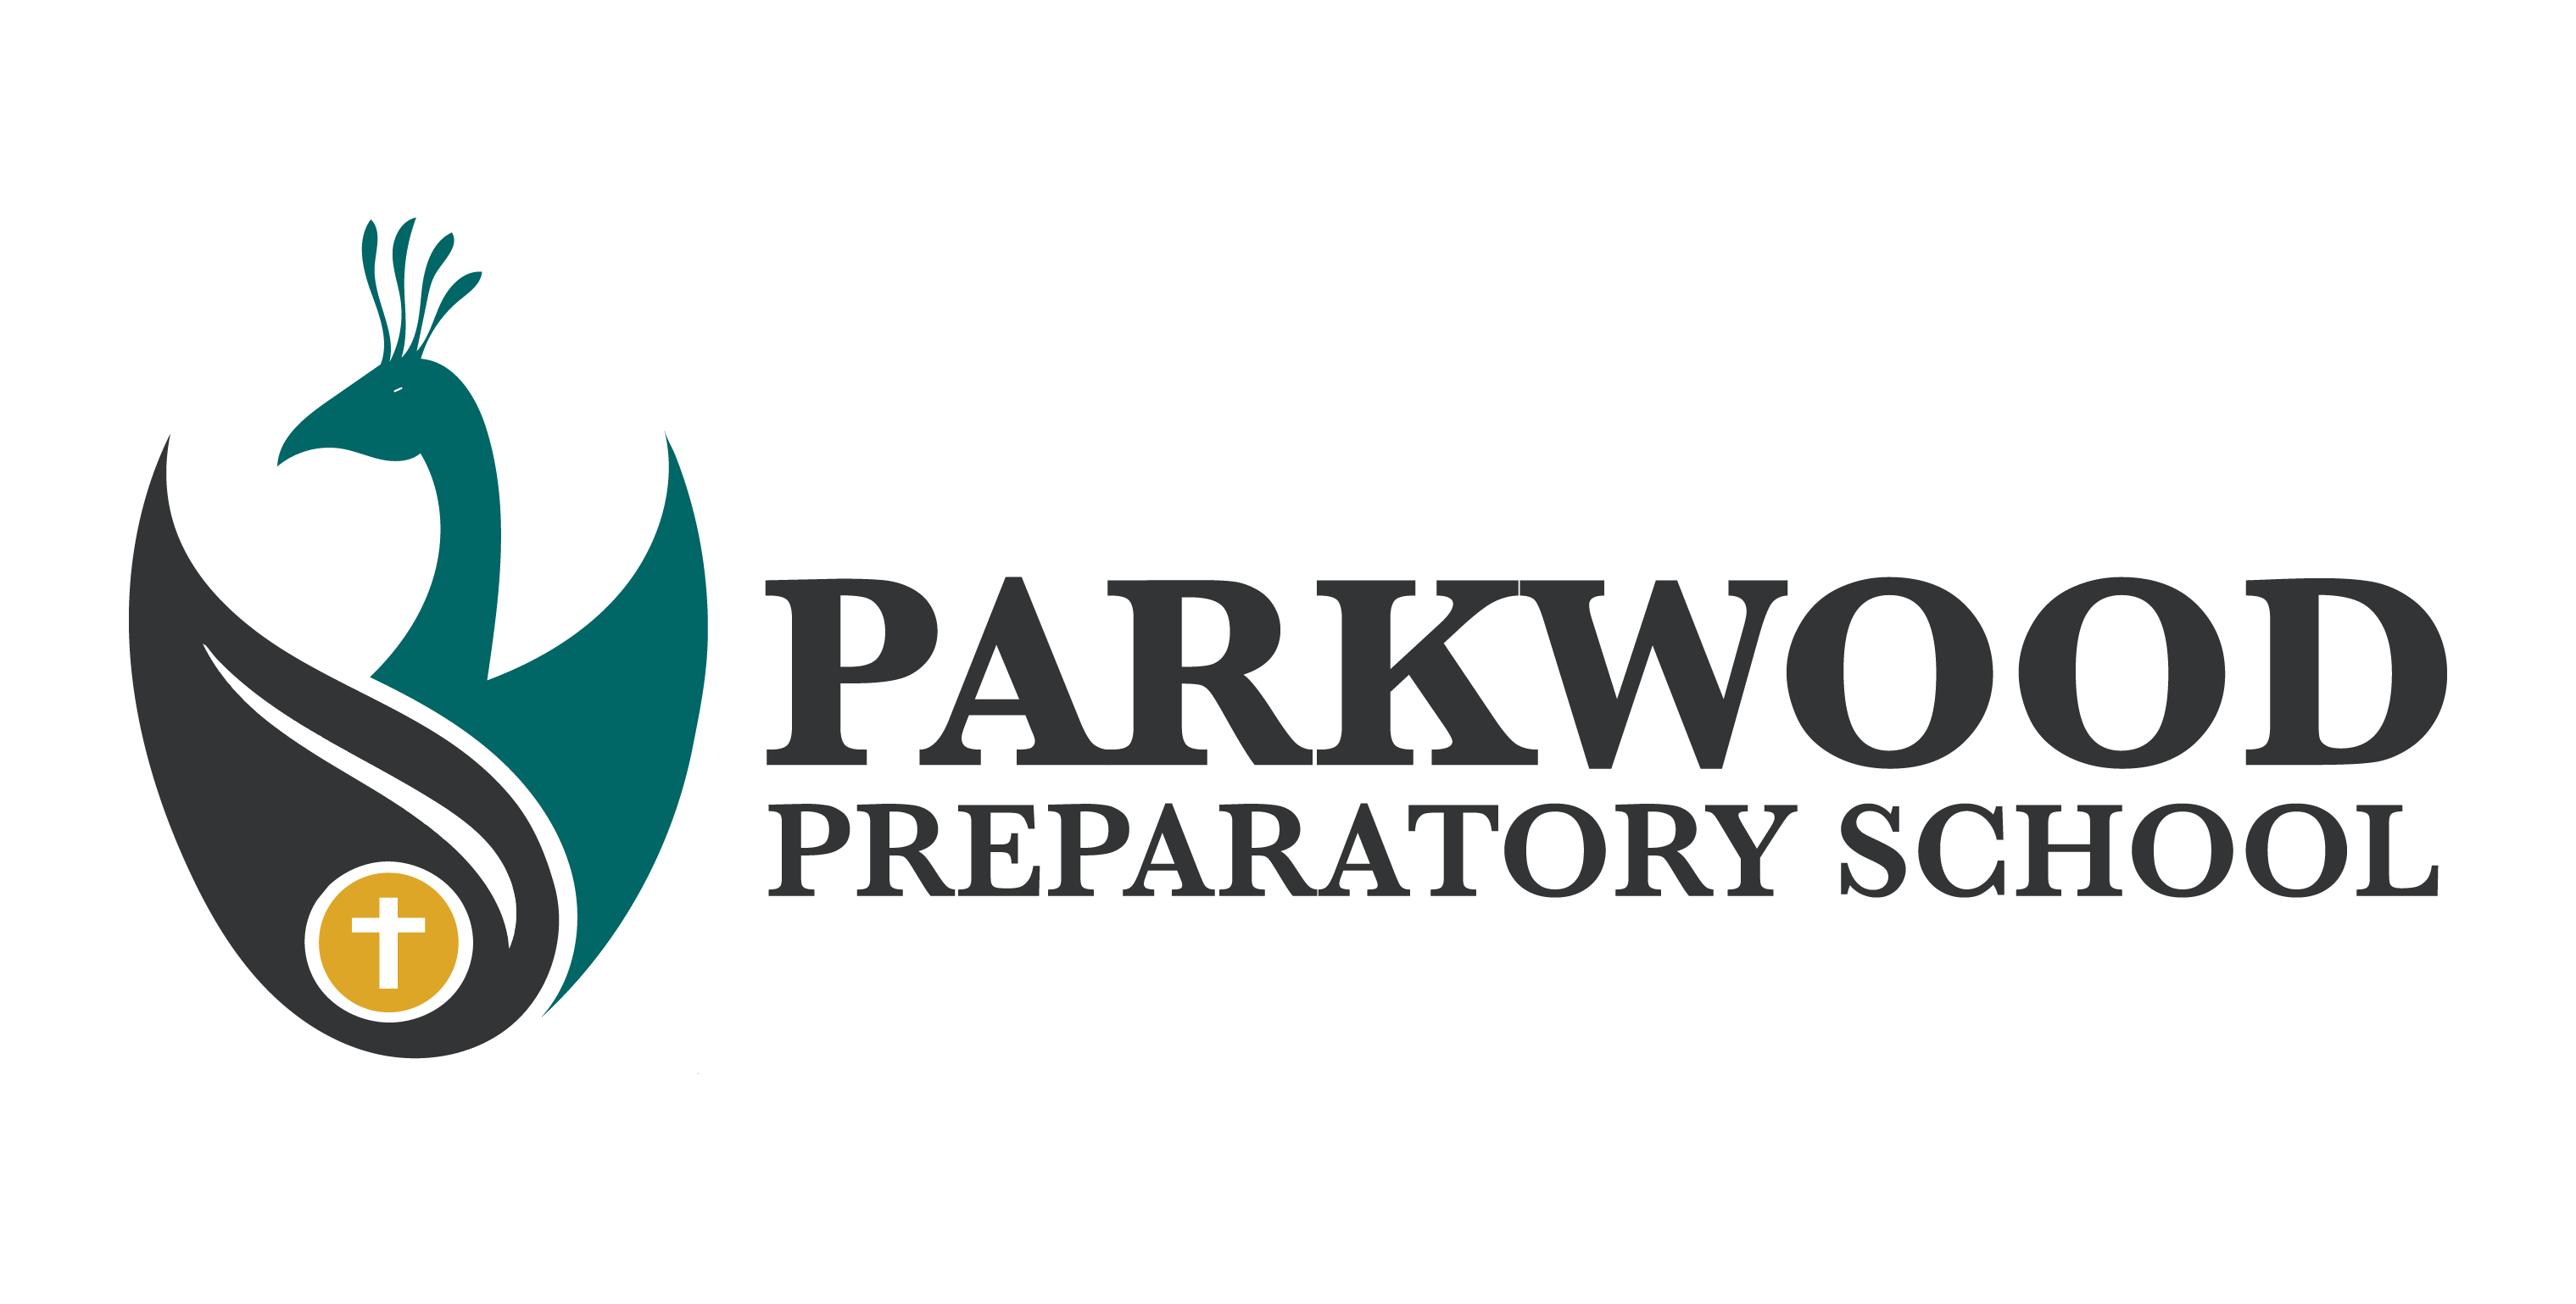 Parkwood Prepatory School 1 Horizontal 8c080f89